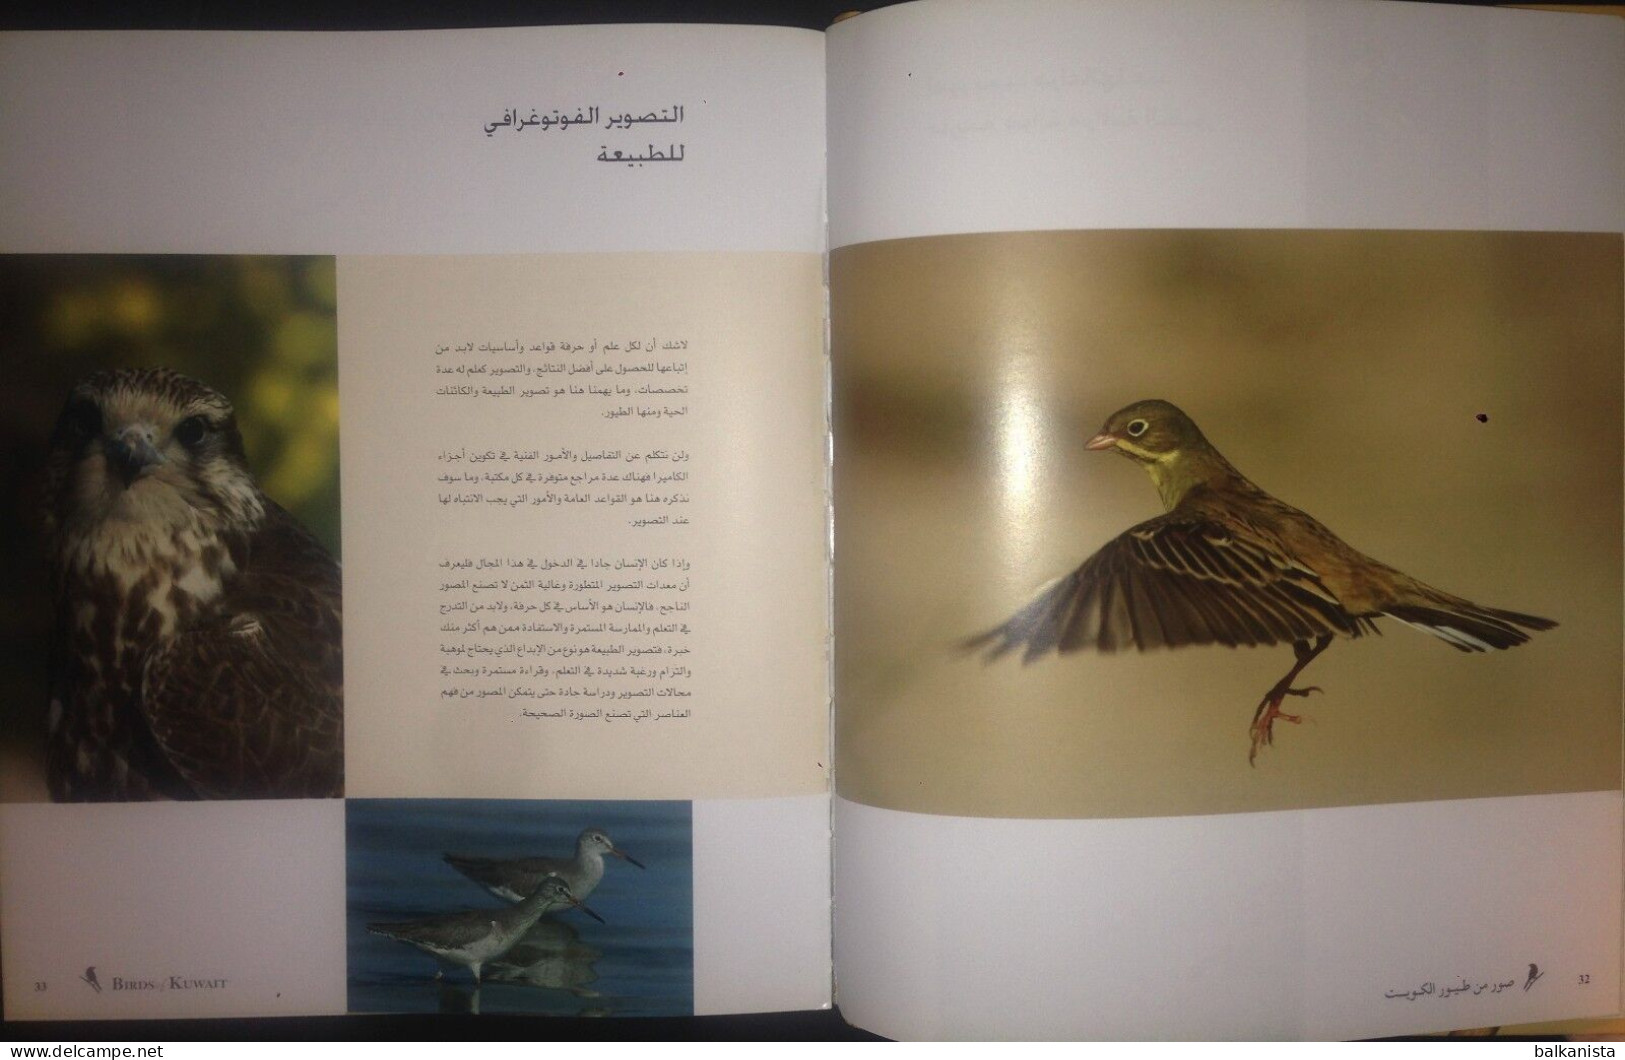 KUWAIT Birds Of Kuwait A Portrait Abdullah F. Alfadhel Ornithology - Andere & Zonder Classificatie